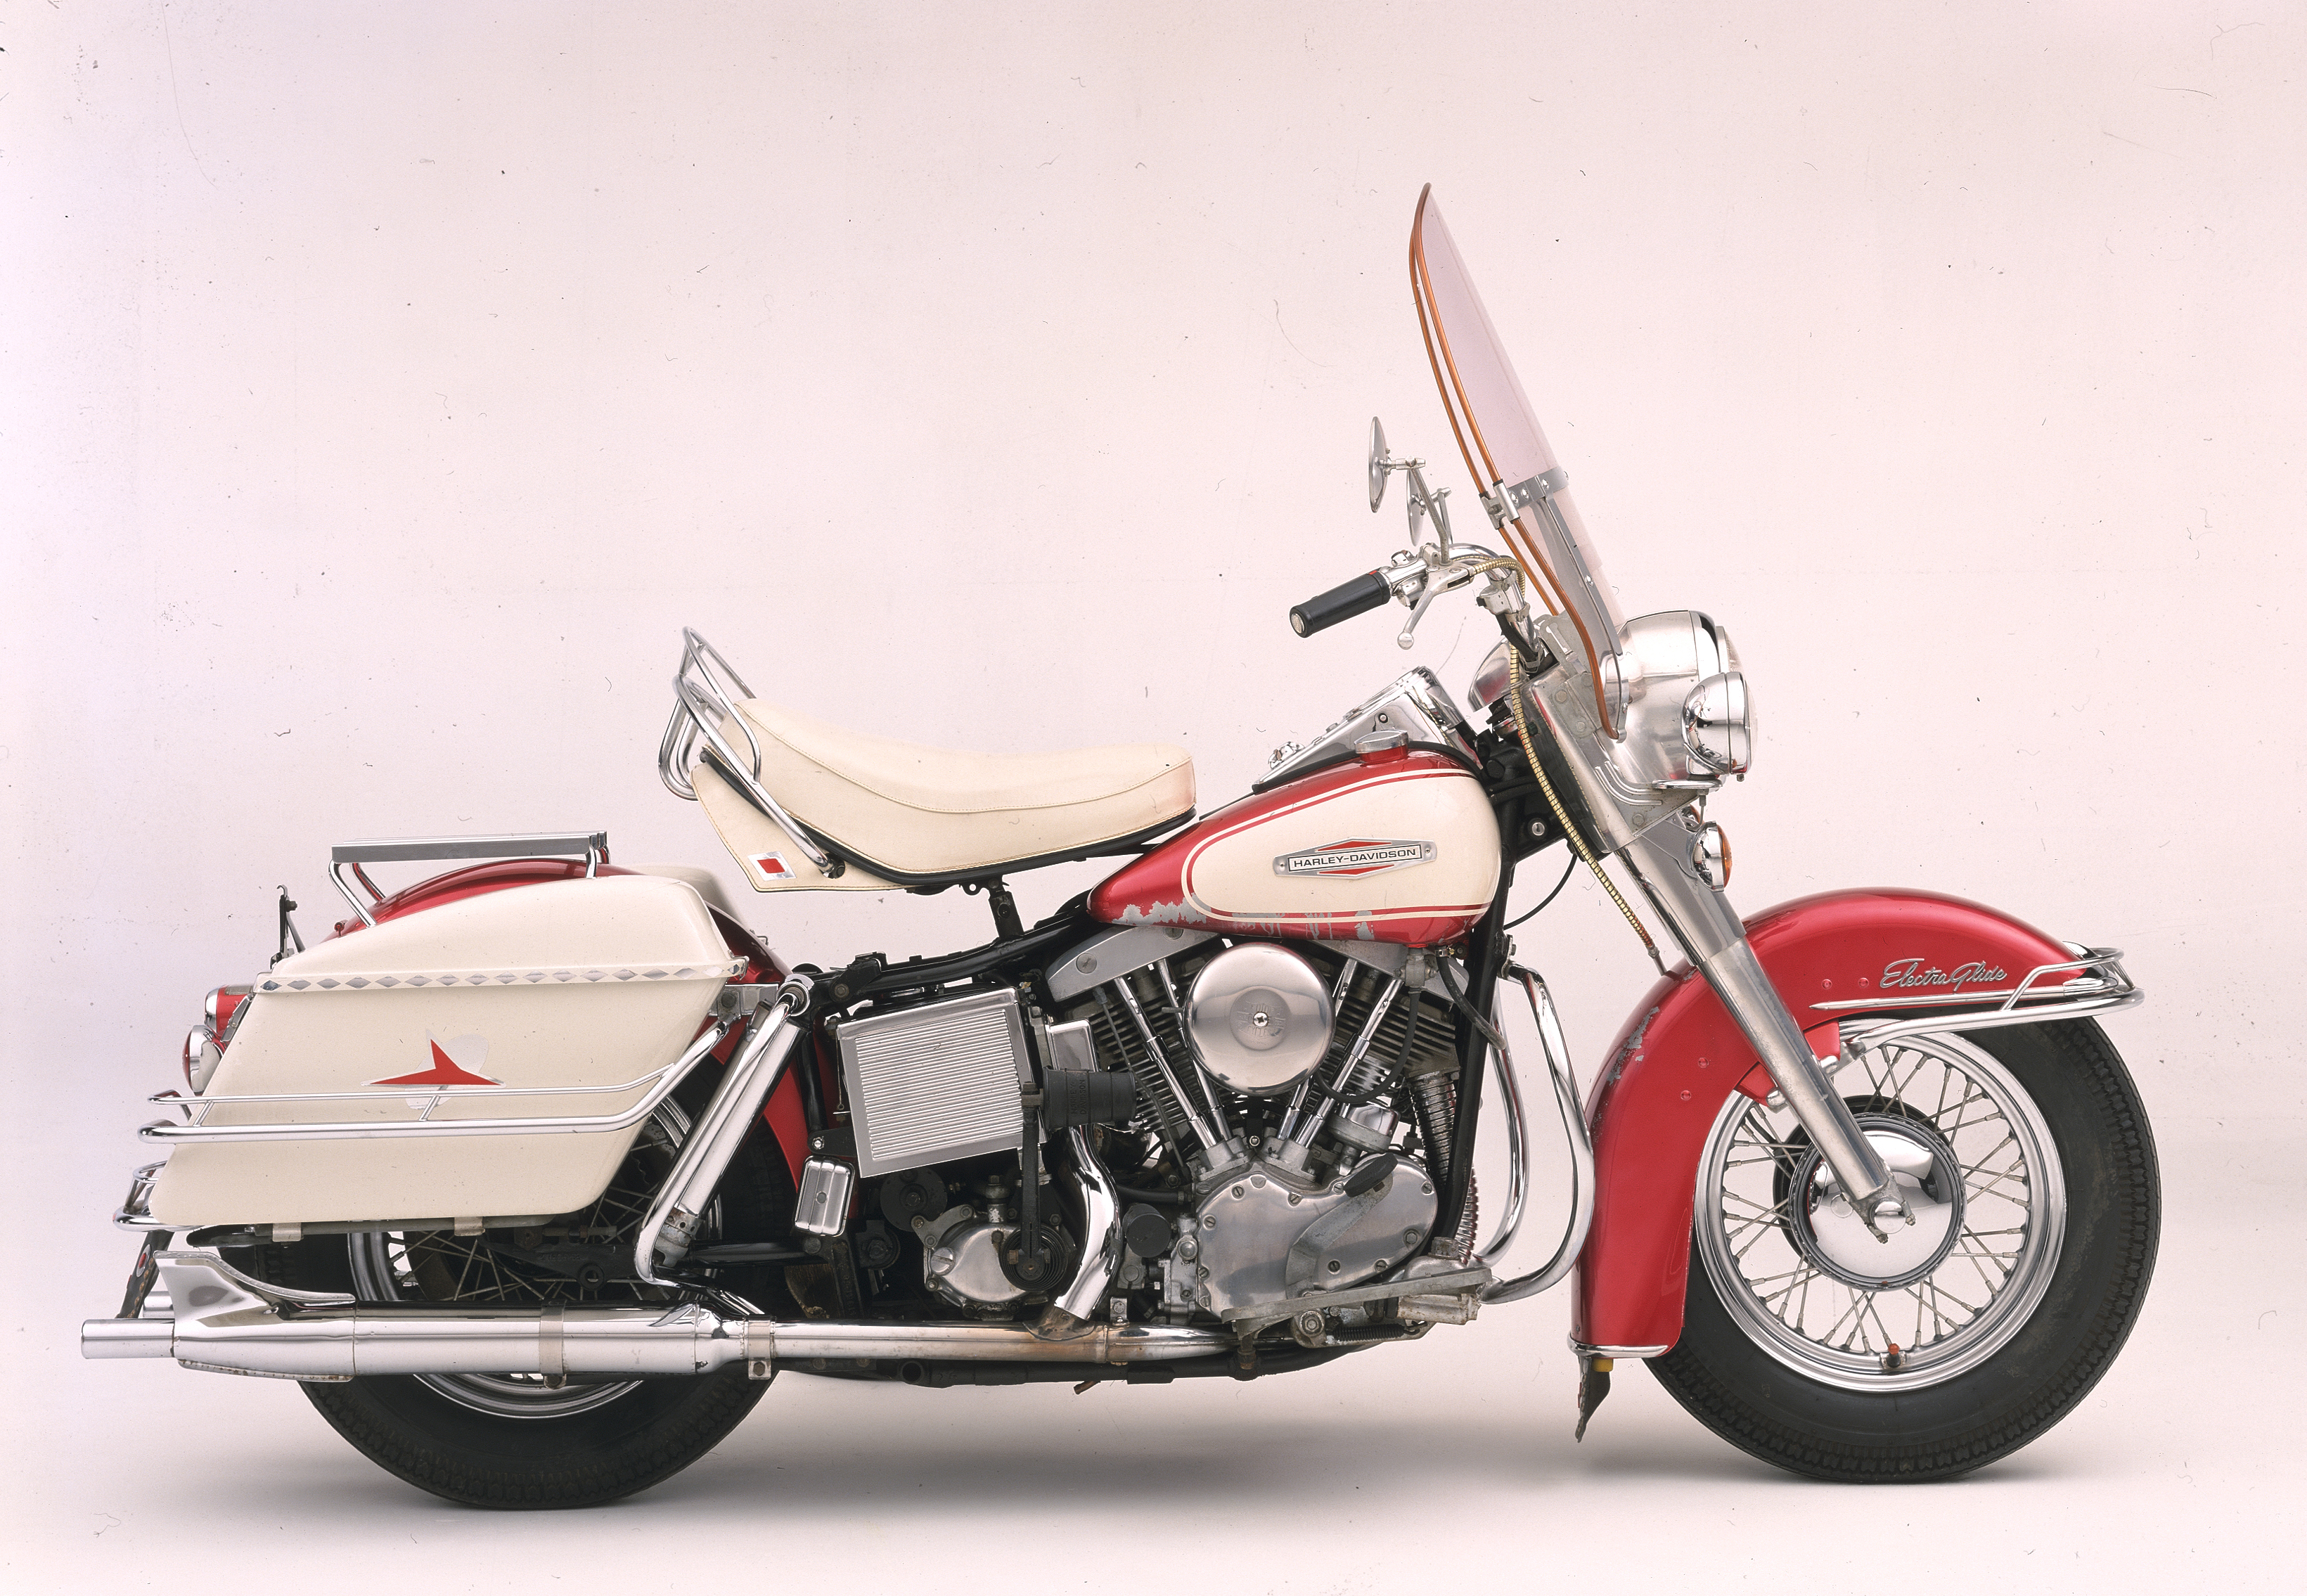 Harley Davidson Shovelhead V Twin Motorcycles History Of The Big Twin Cycle World